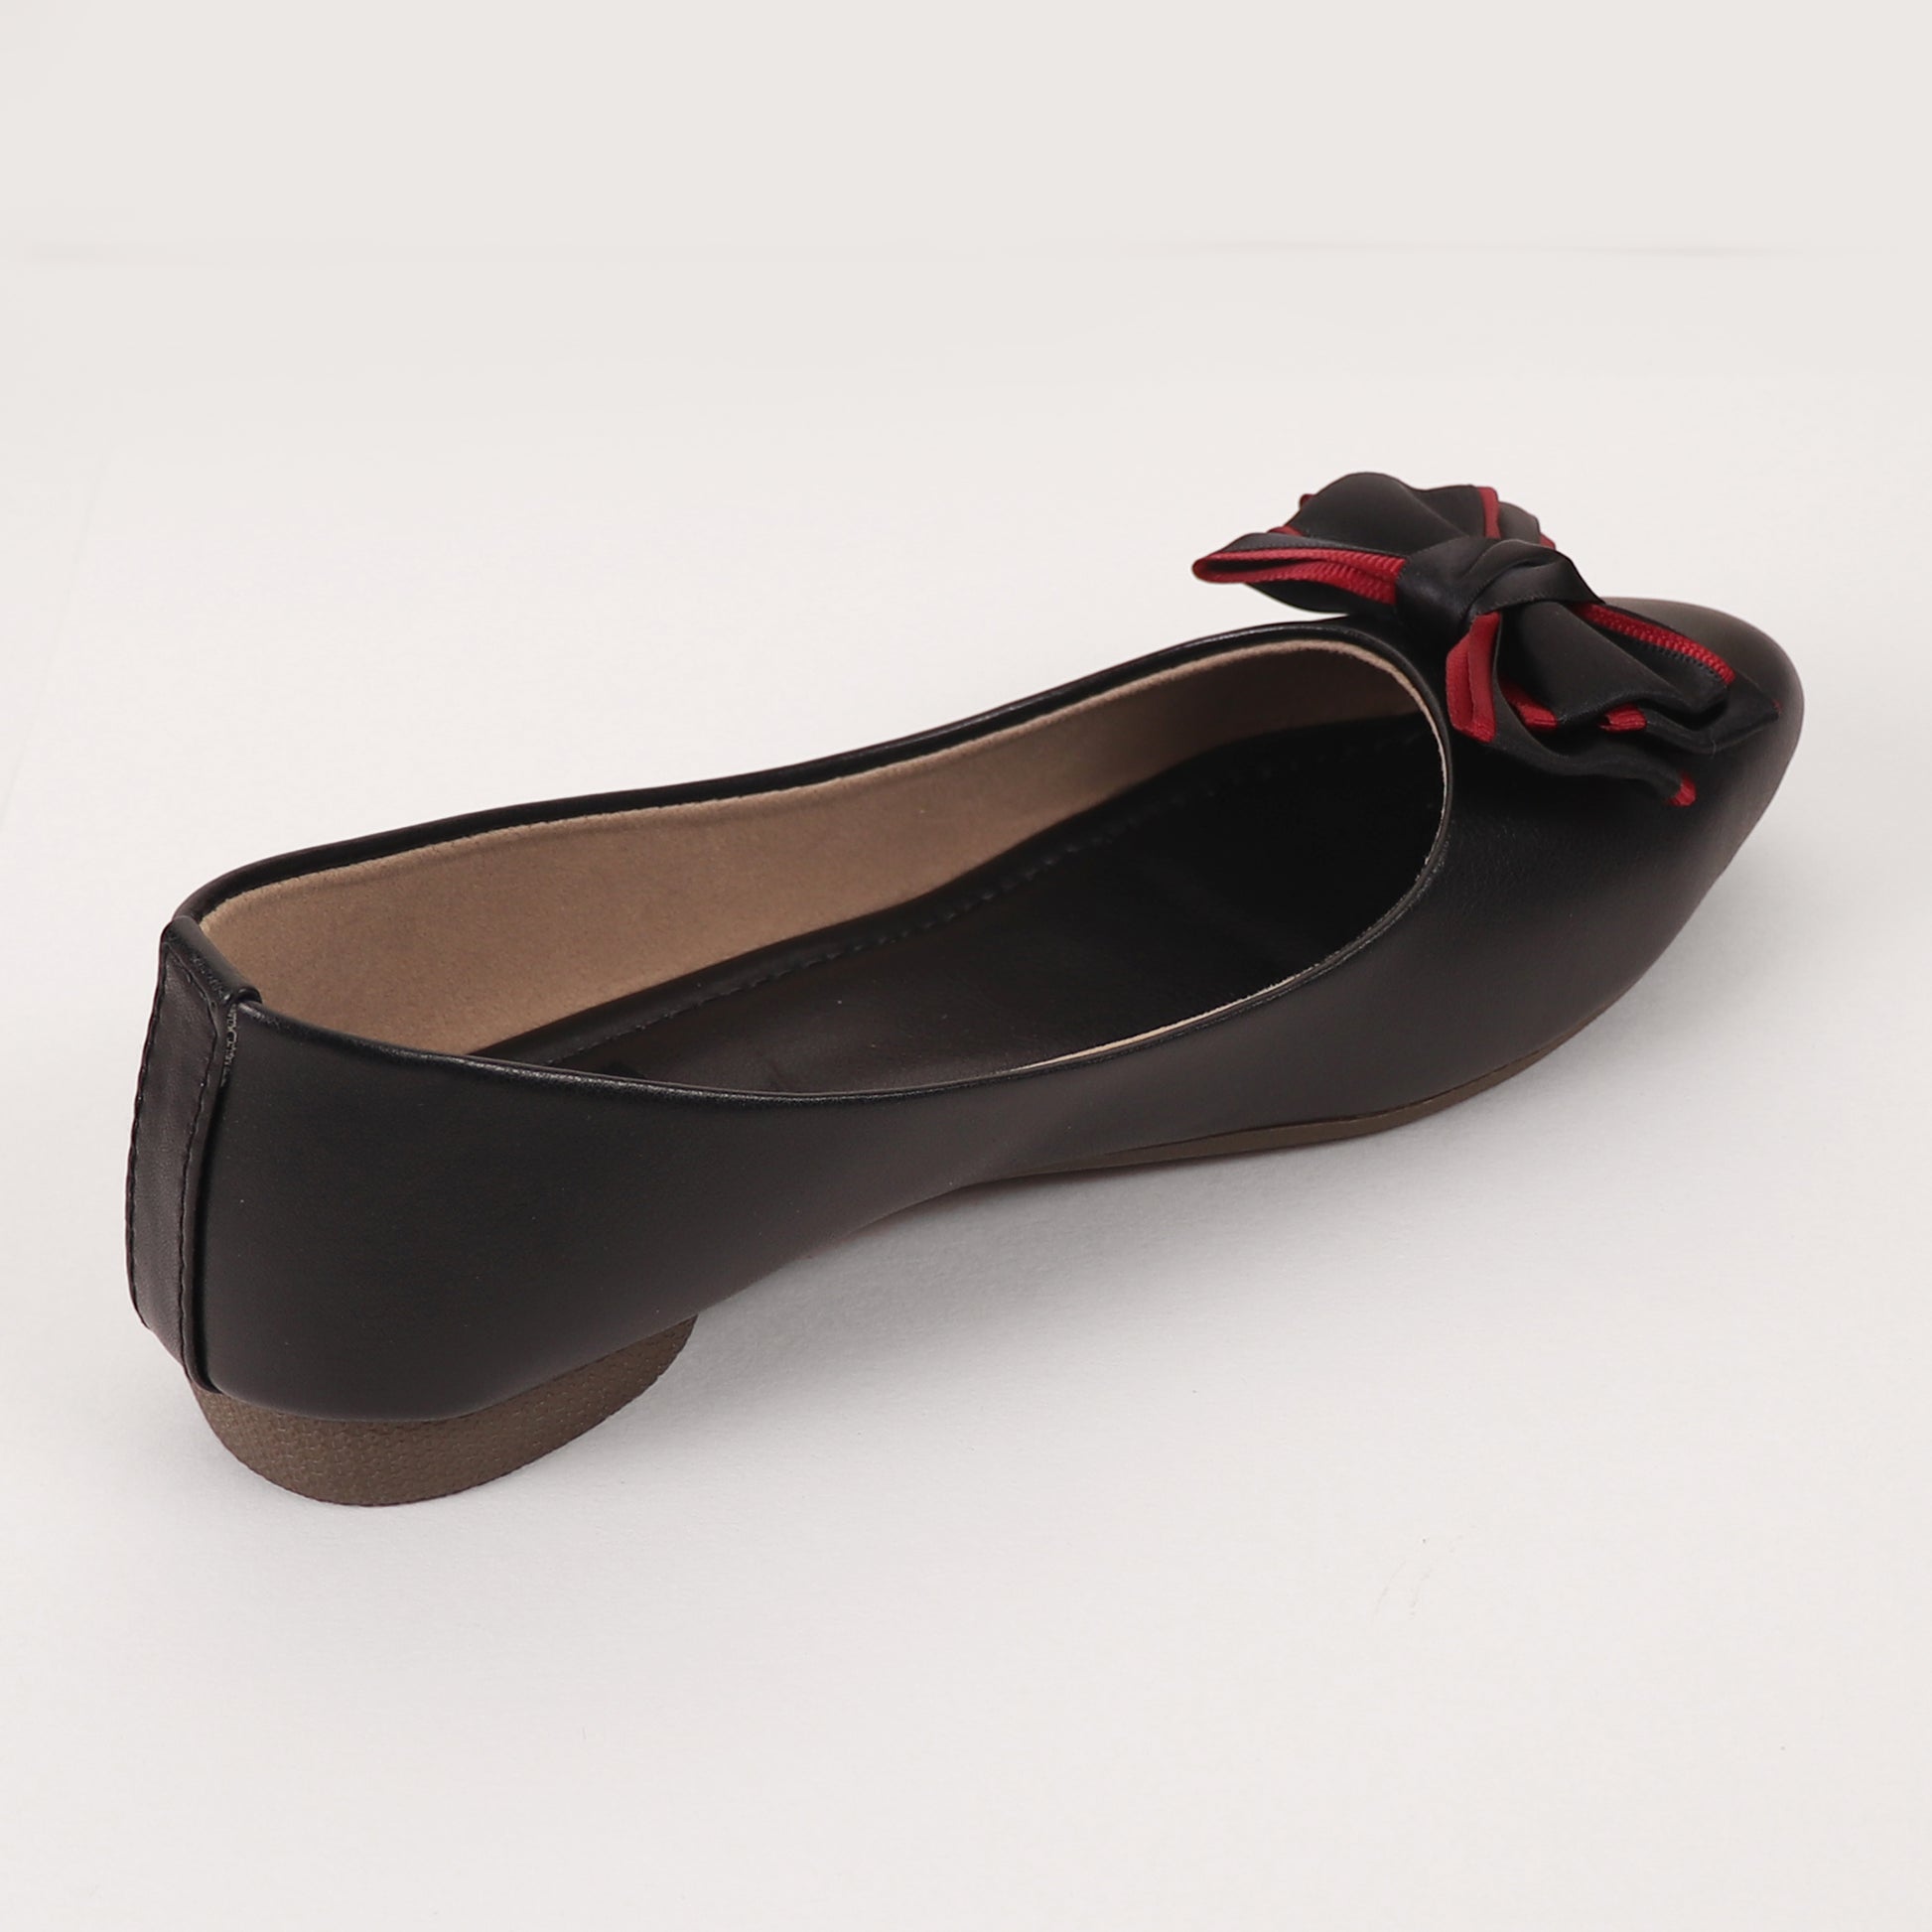 Foot Wear,Satin Bow Bellies in Black - Cippele Multi Store